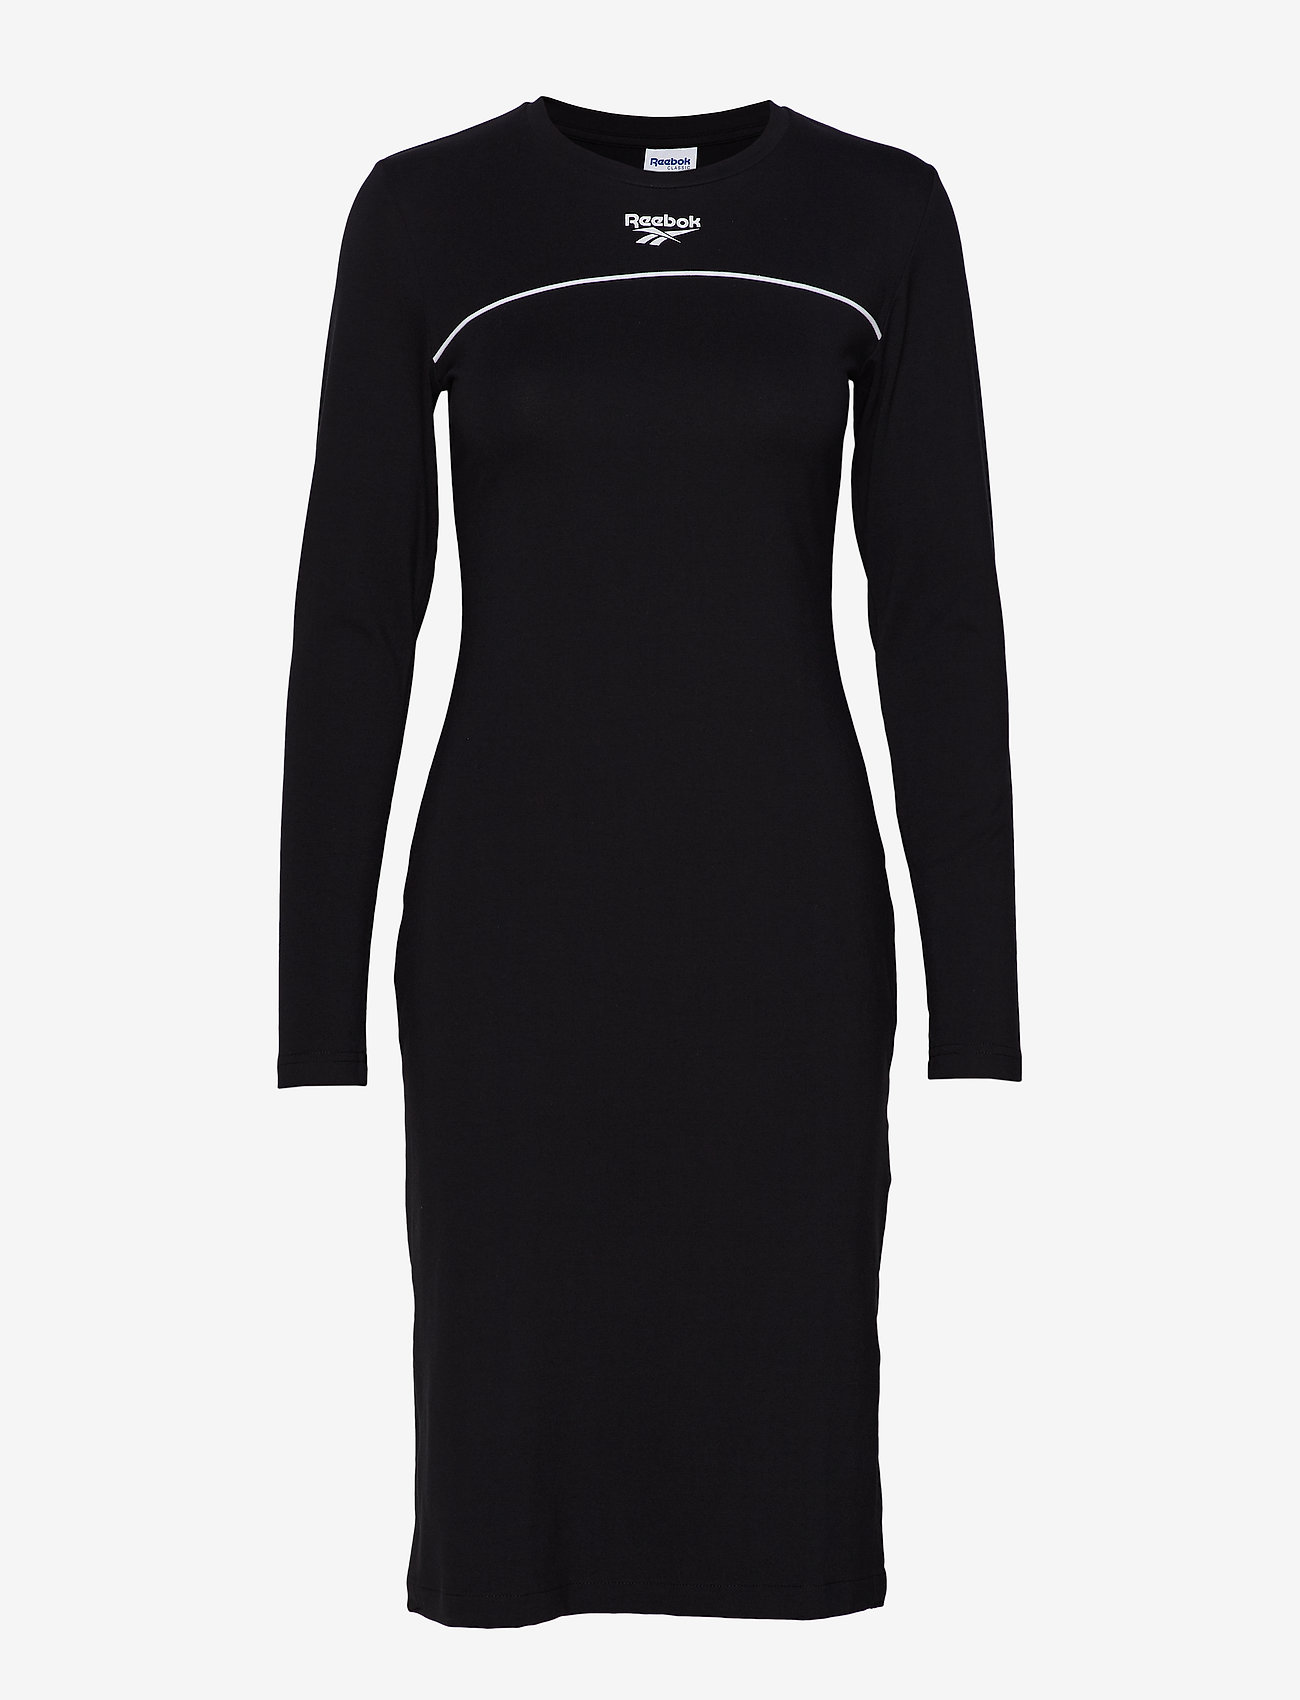 Cl V P Cotton Dress (Black) (29.97 